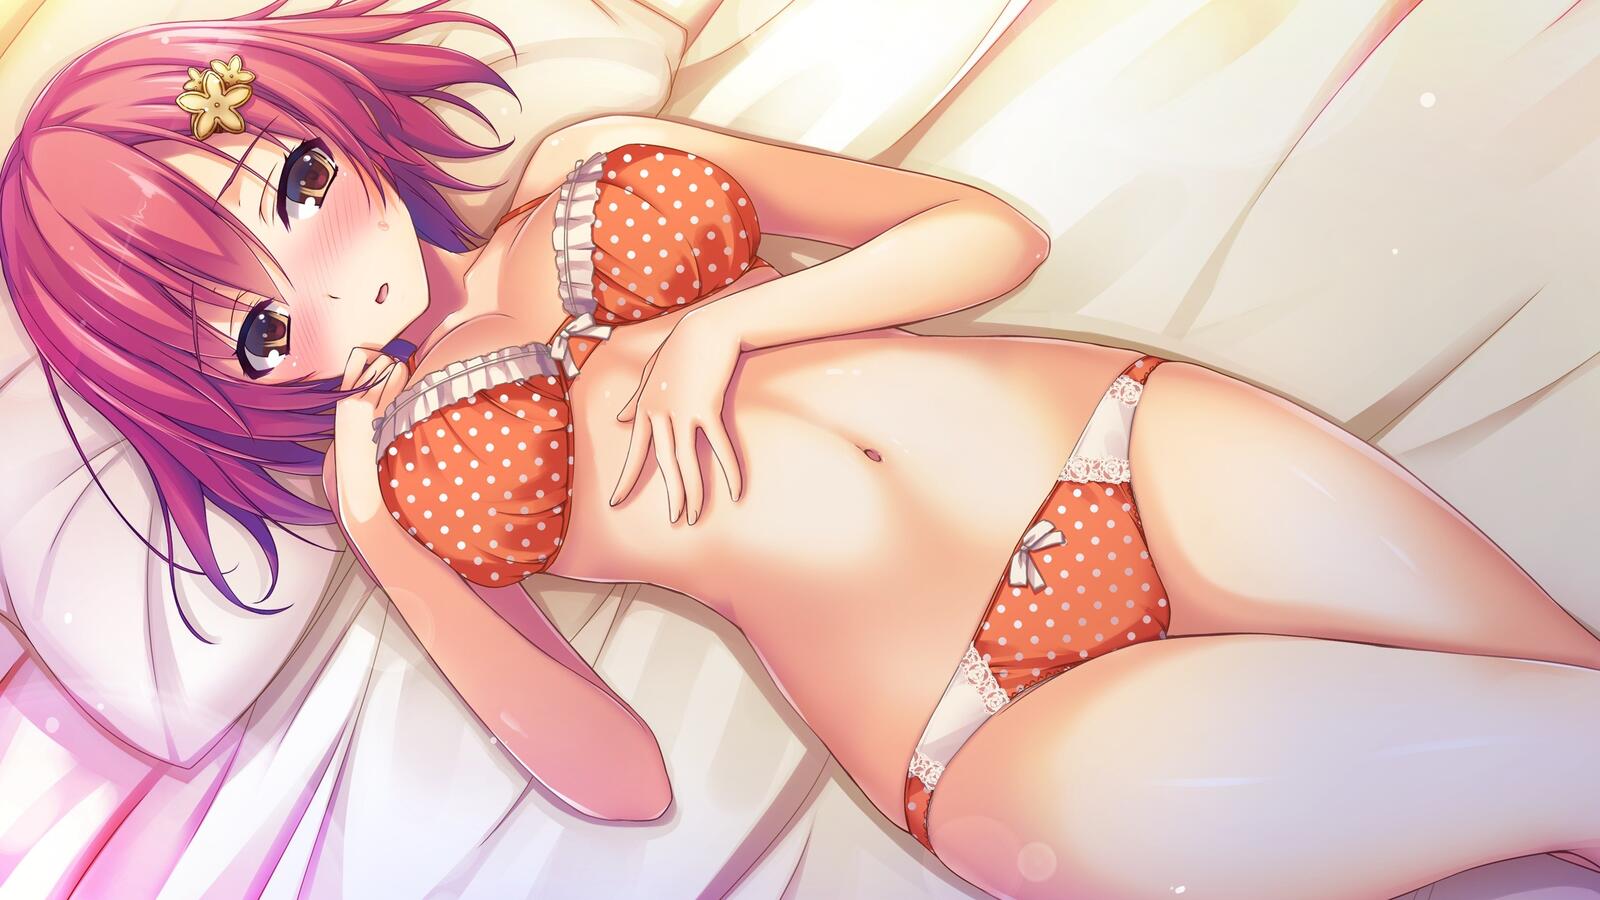 Wallpapers redhead an anime anime girls on the desktop